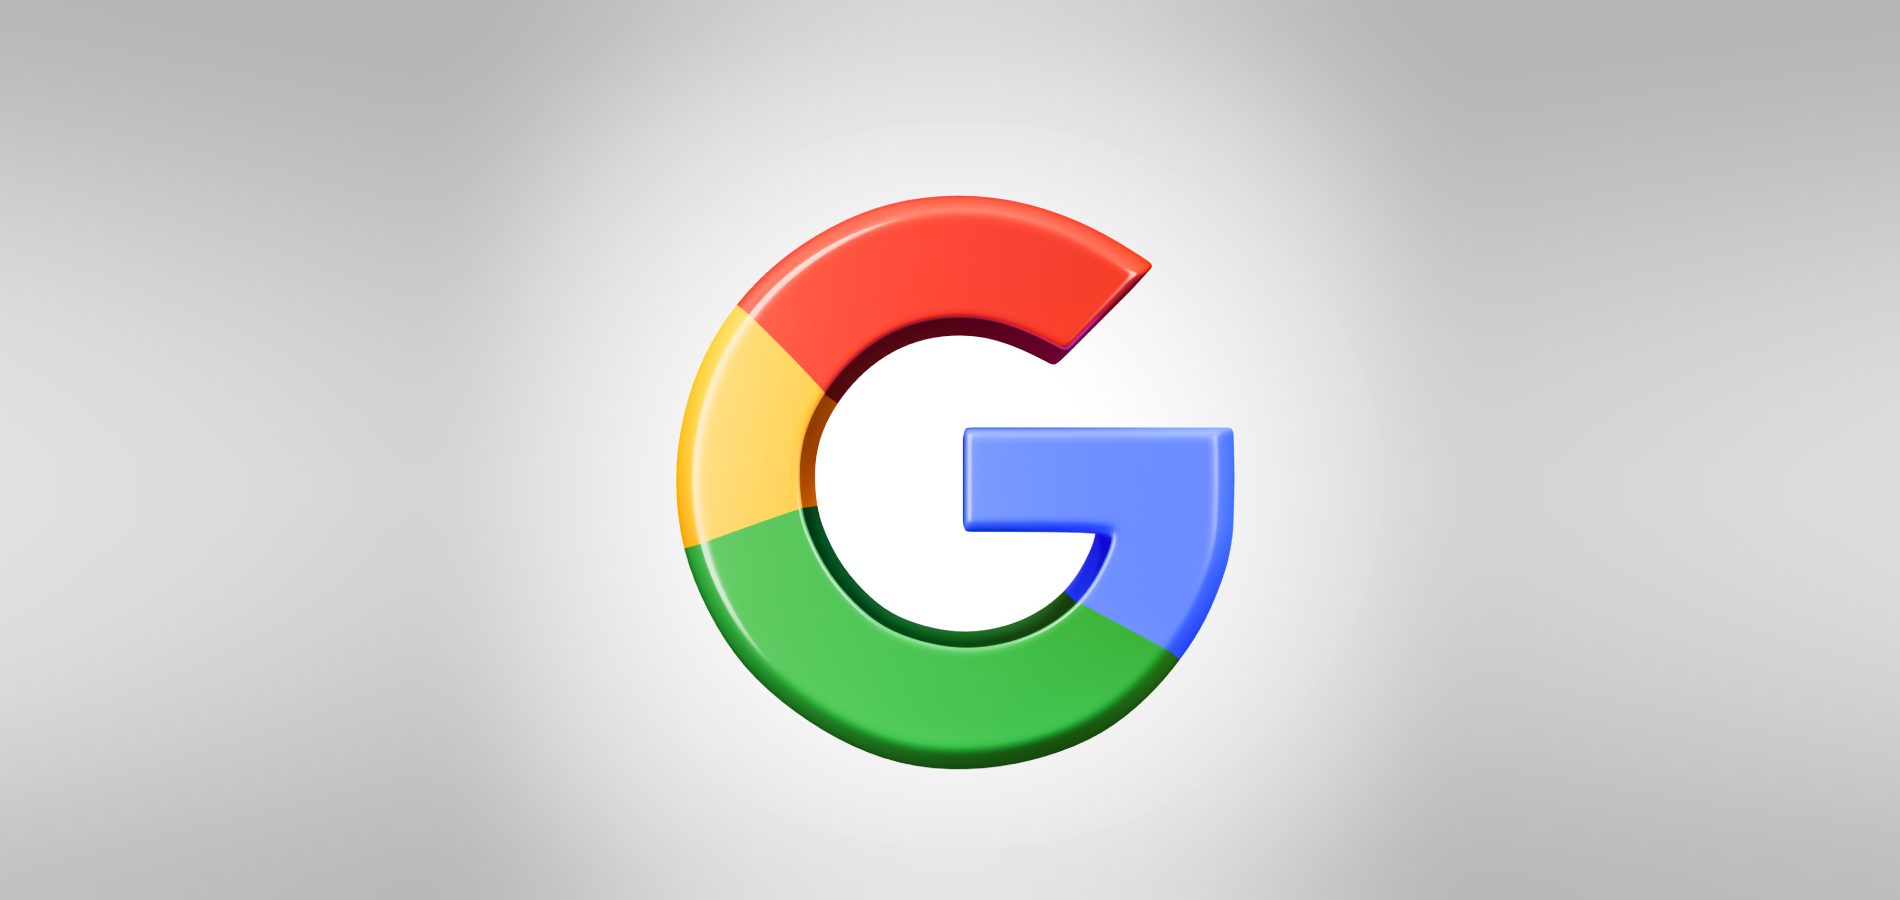 Google: обновление антиспам-алгоритма и выпуск инструмента для мониторинга состояния поиска